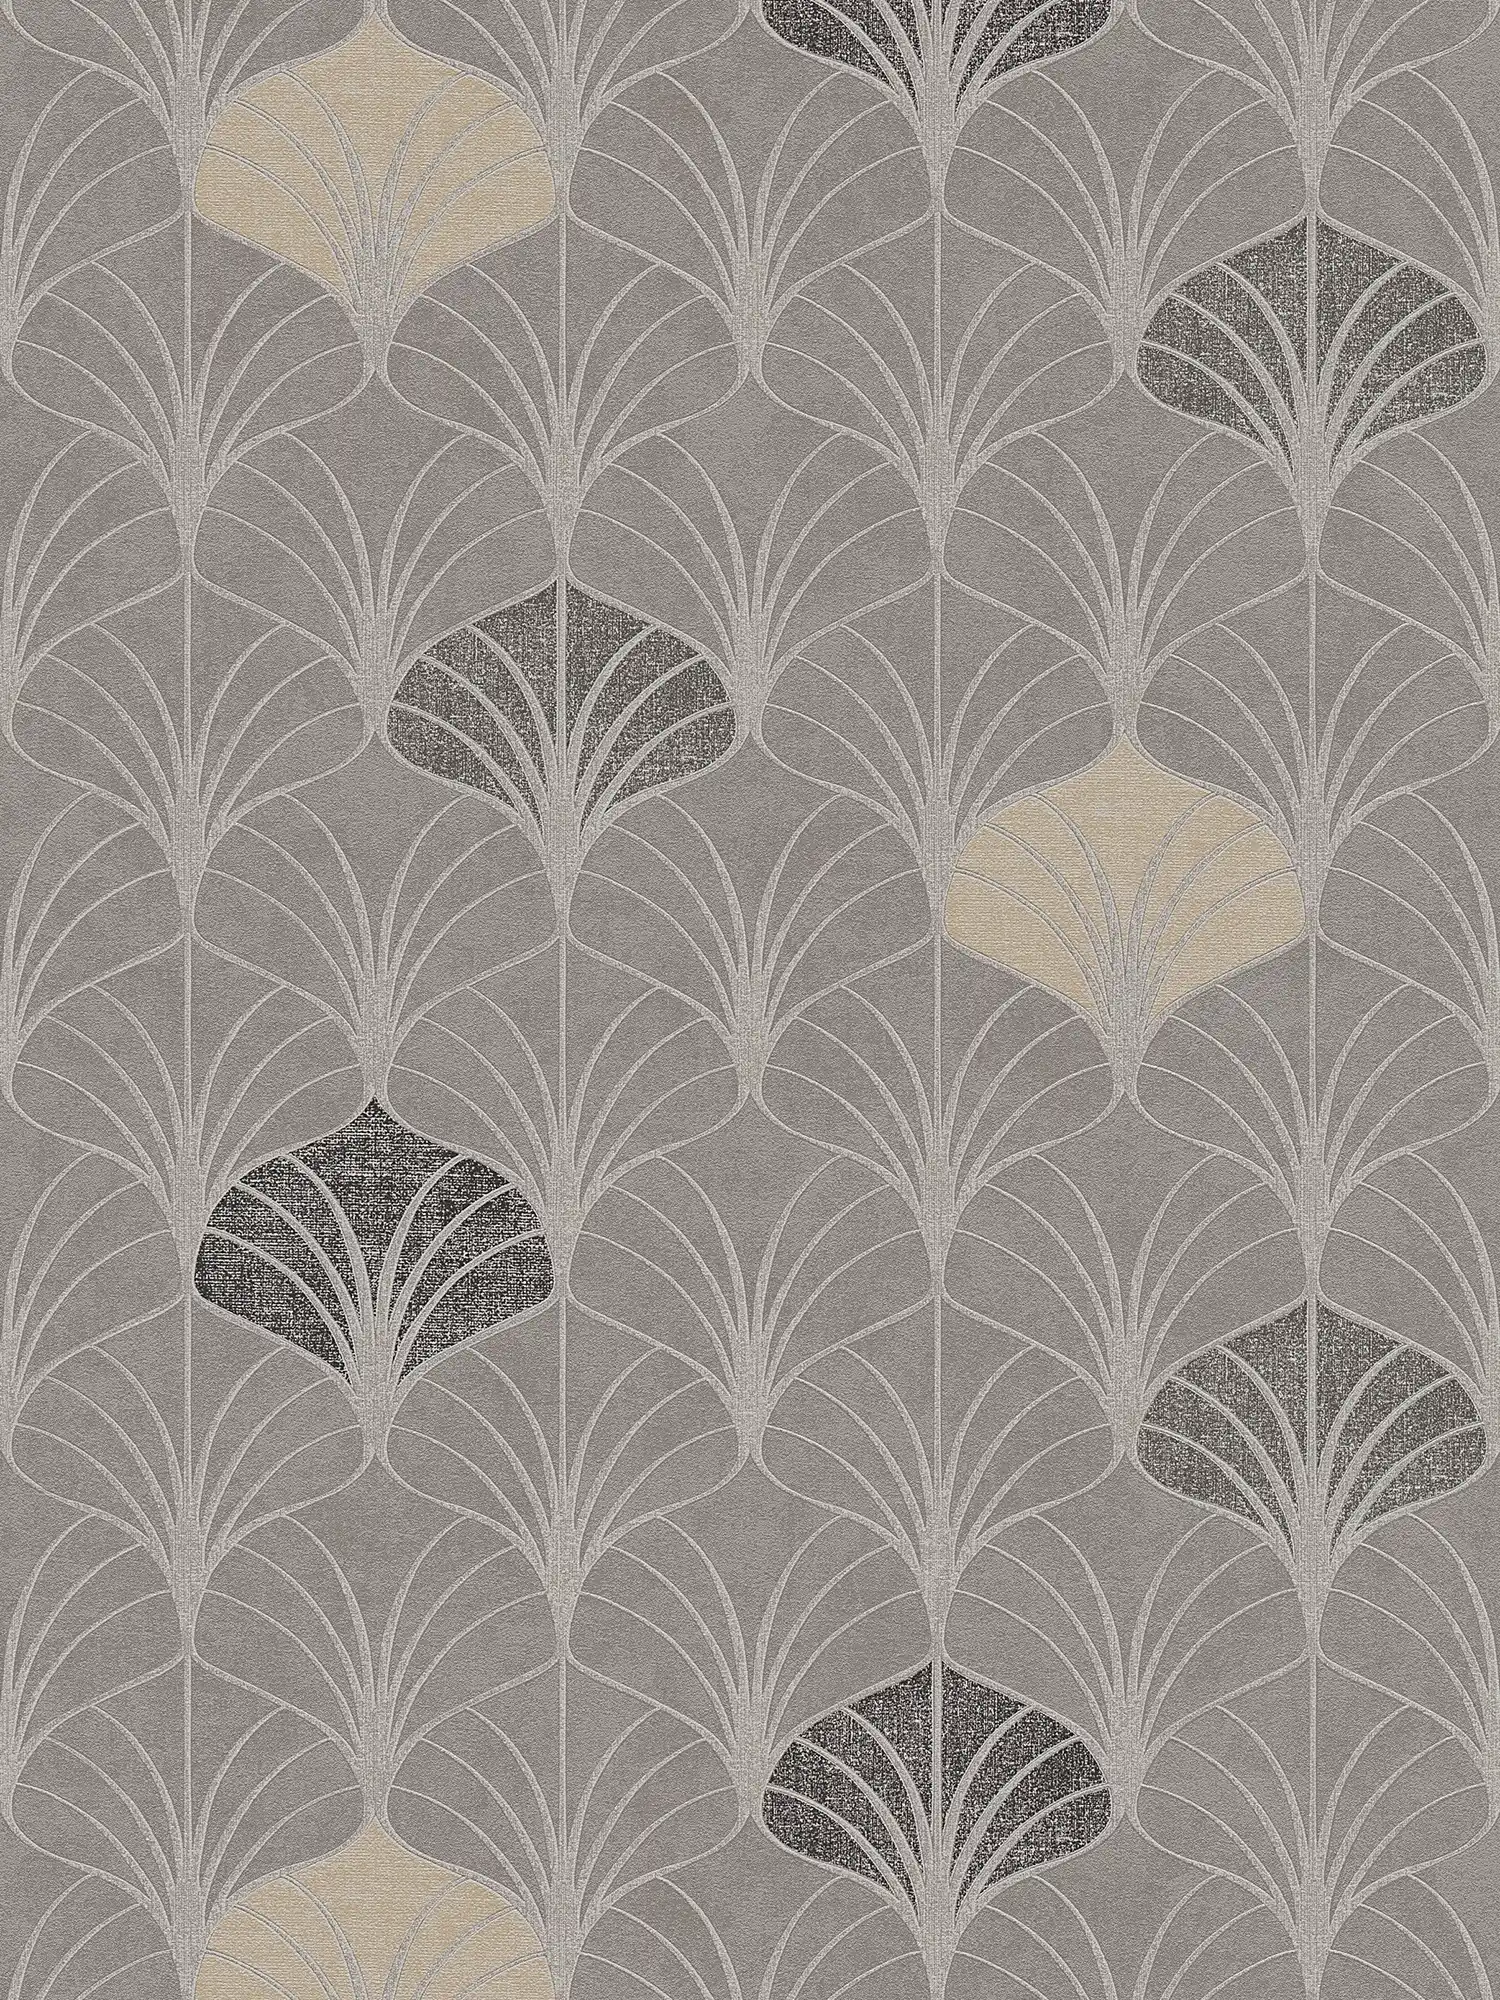 Pattern wallpaper art deco style with metallic effect - grey, beige, brown
